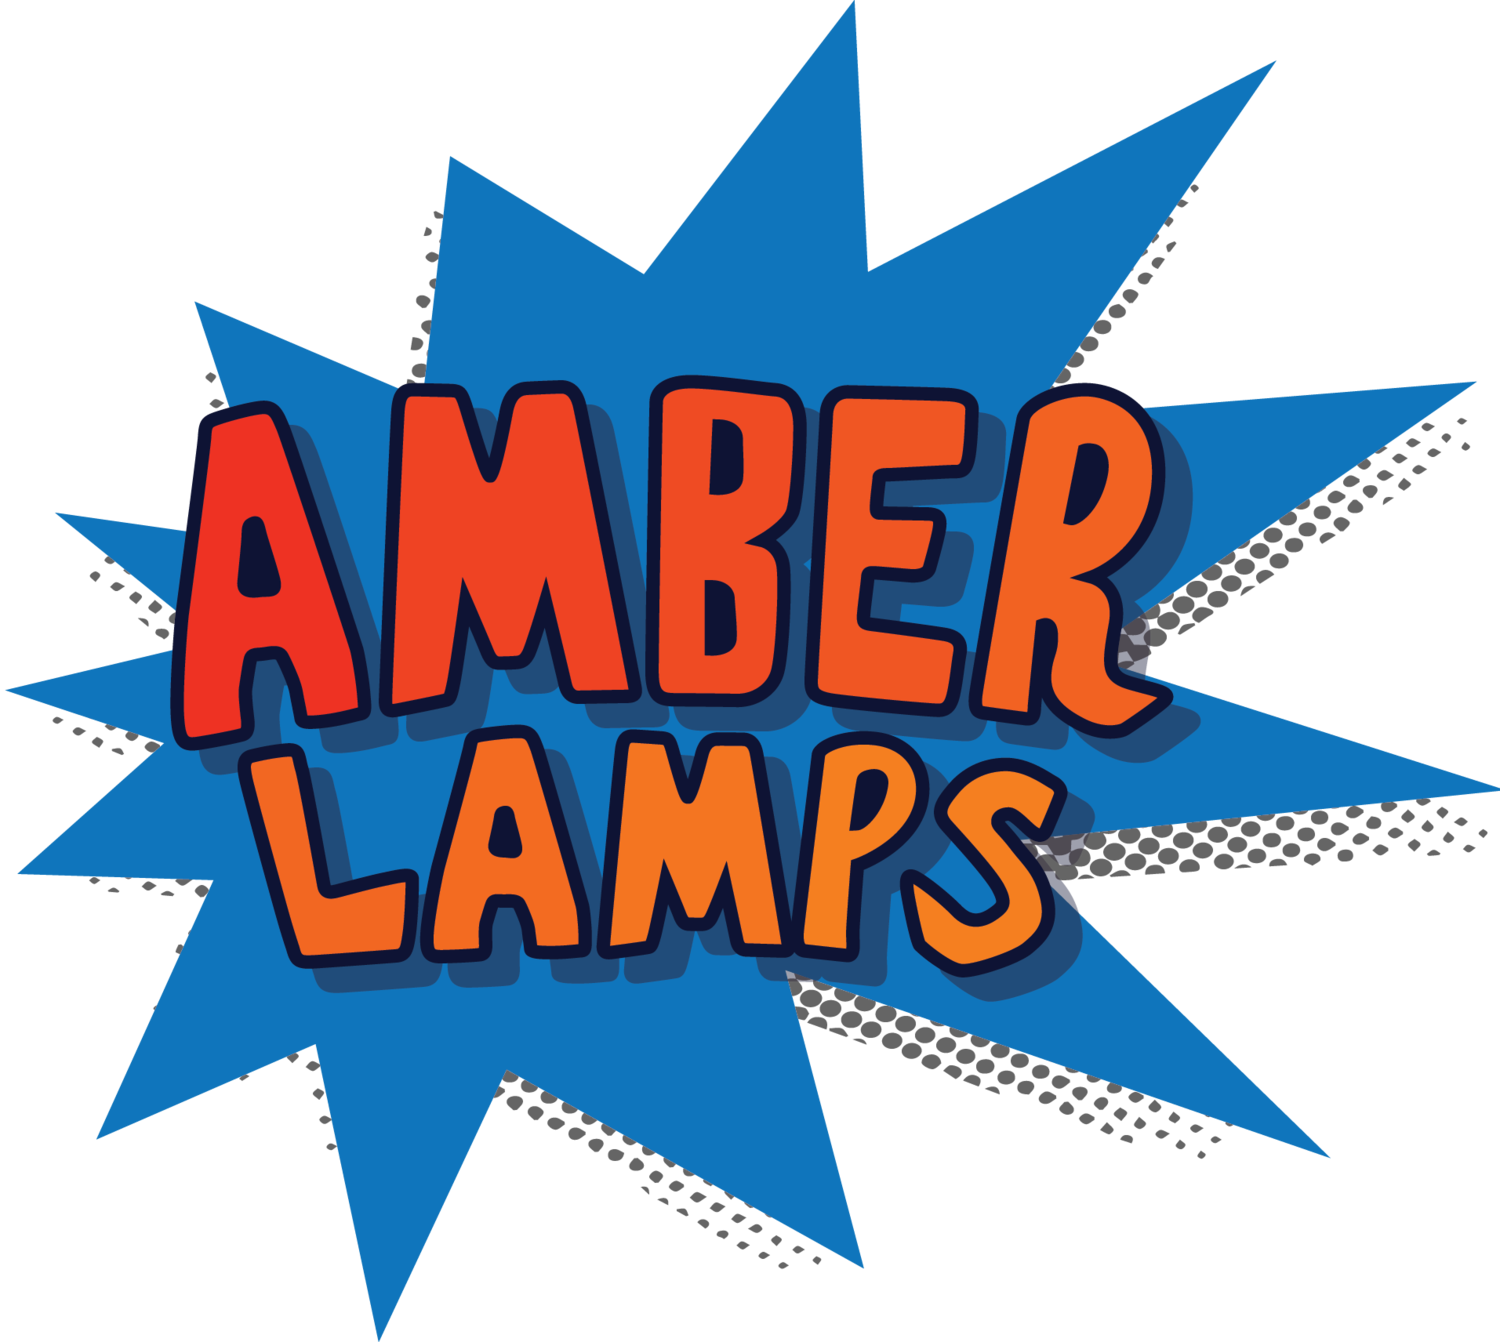 Amber Lamps - New York Punk Rock